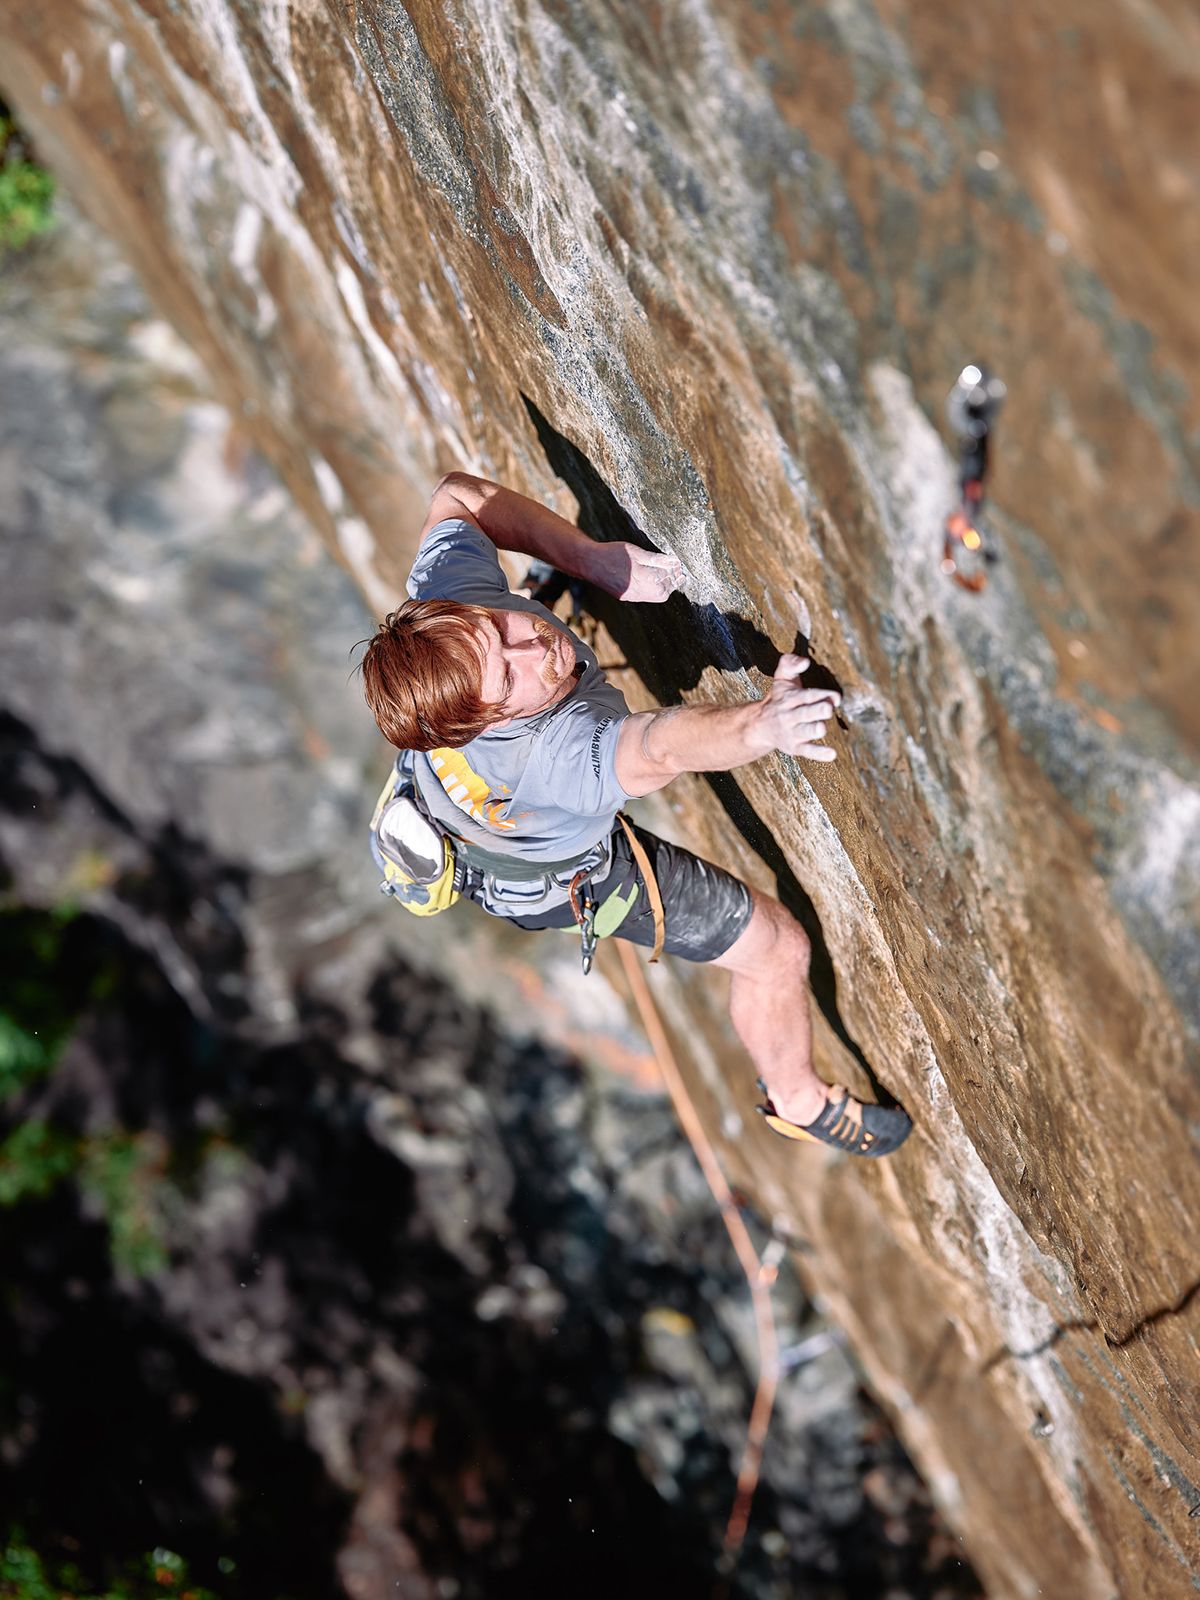 Ginger-headed rock climber on orange rock